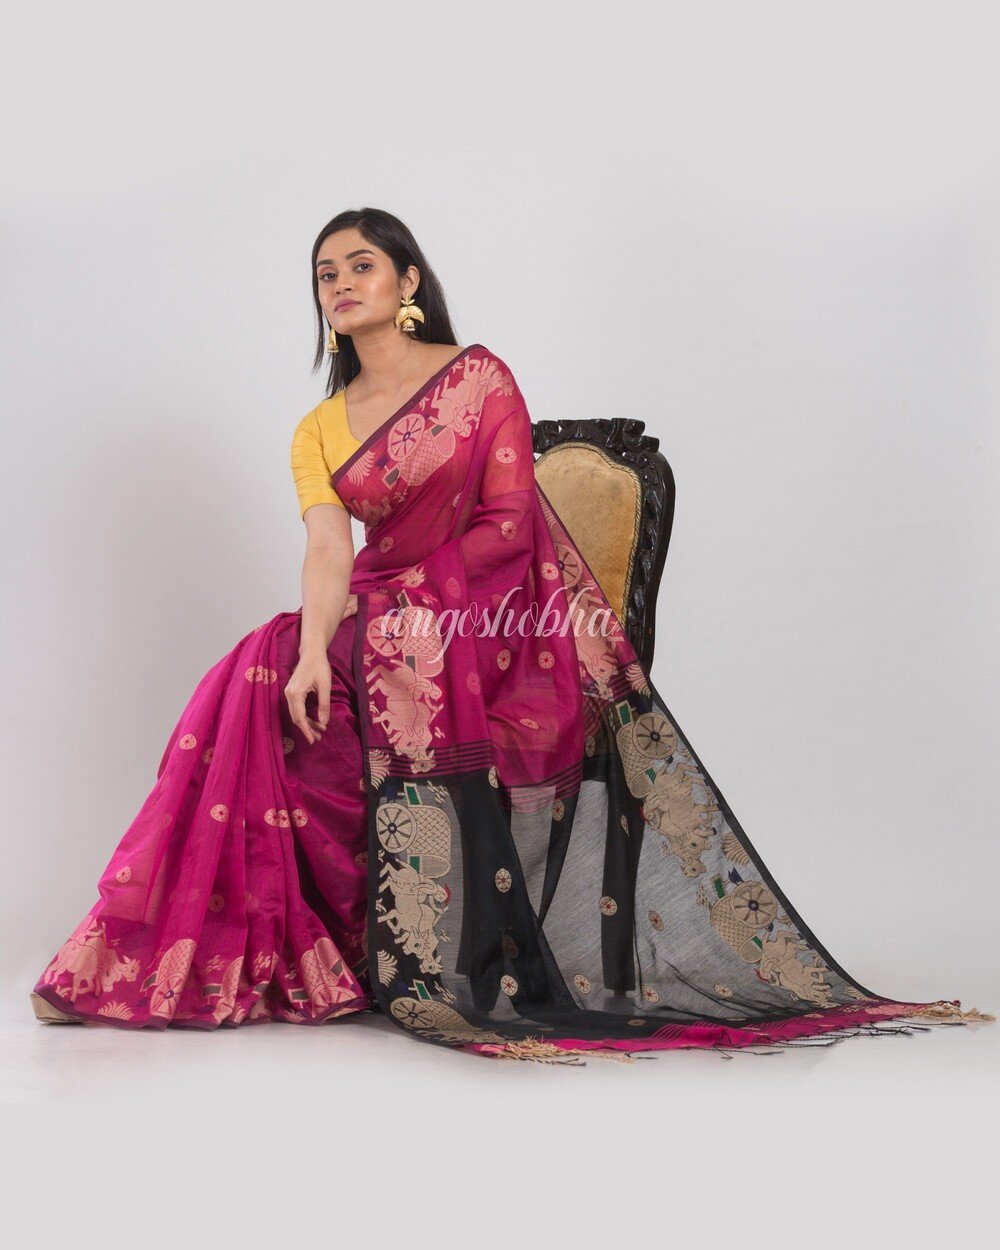 Women's Pink Handloom Cotton Silk Saree - Angoshobha